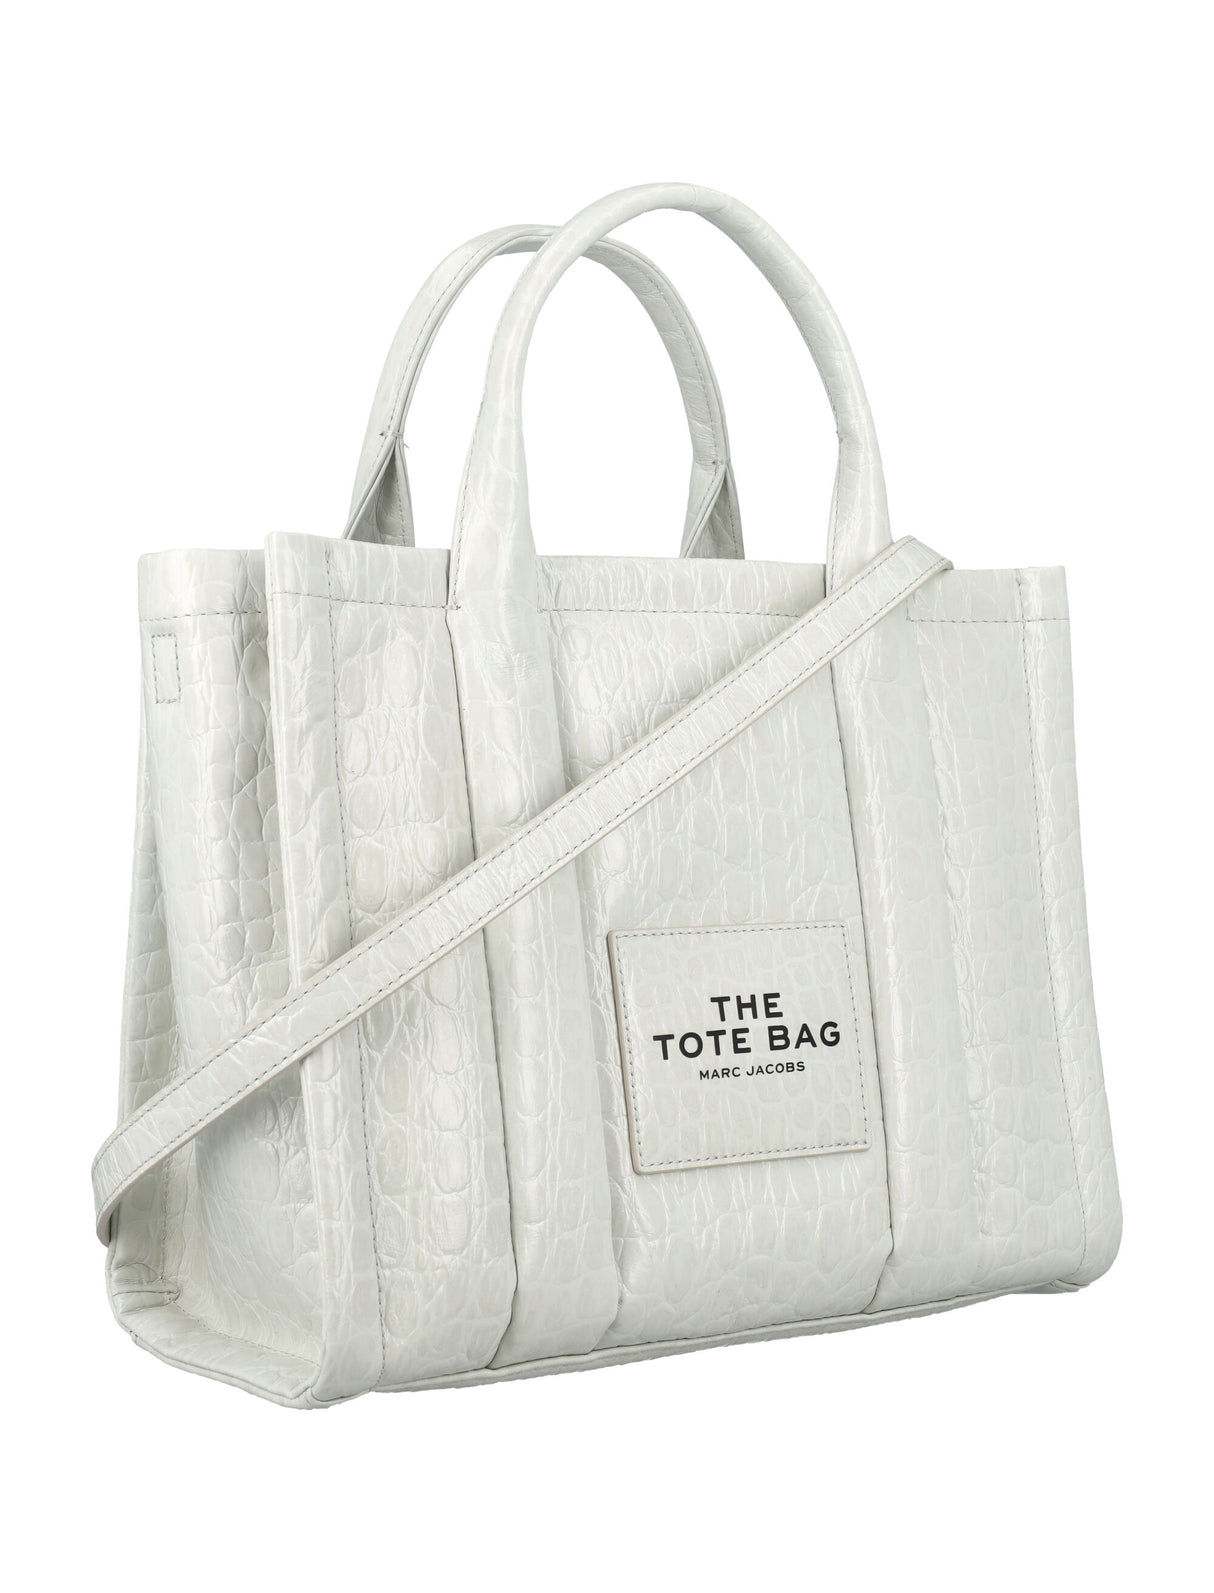 MARC JACOBS White Croc-Embossed Medium Leather Tote Handbag with Adjustable Strap